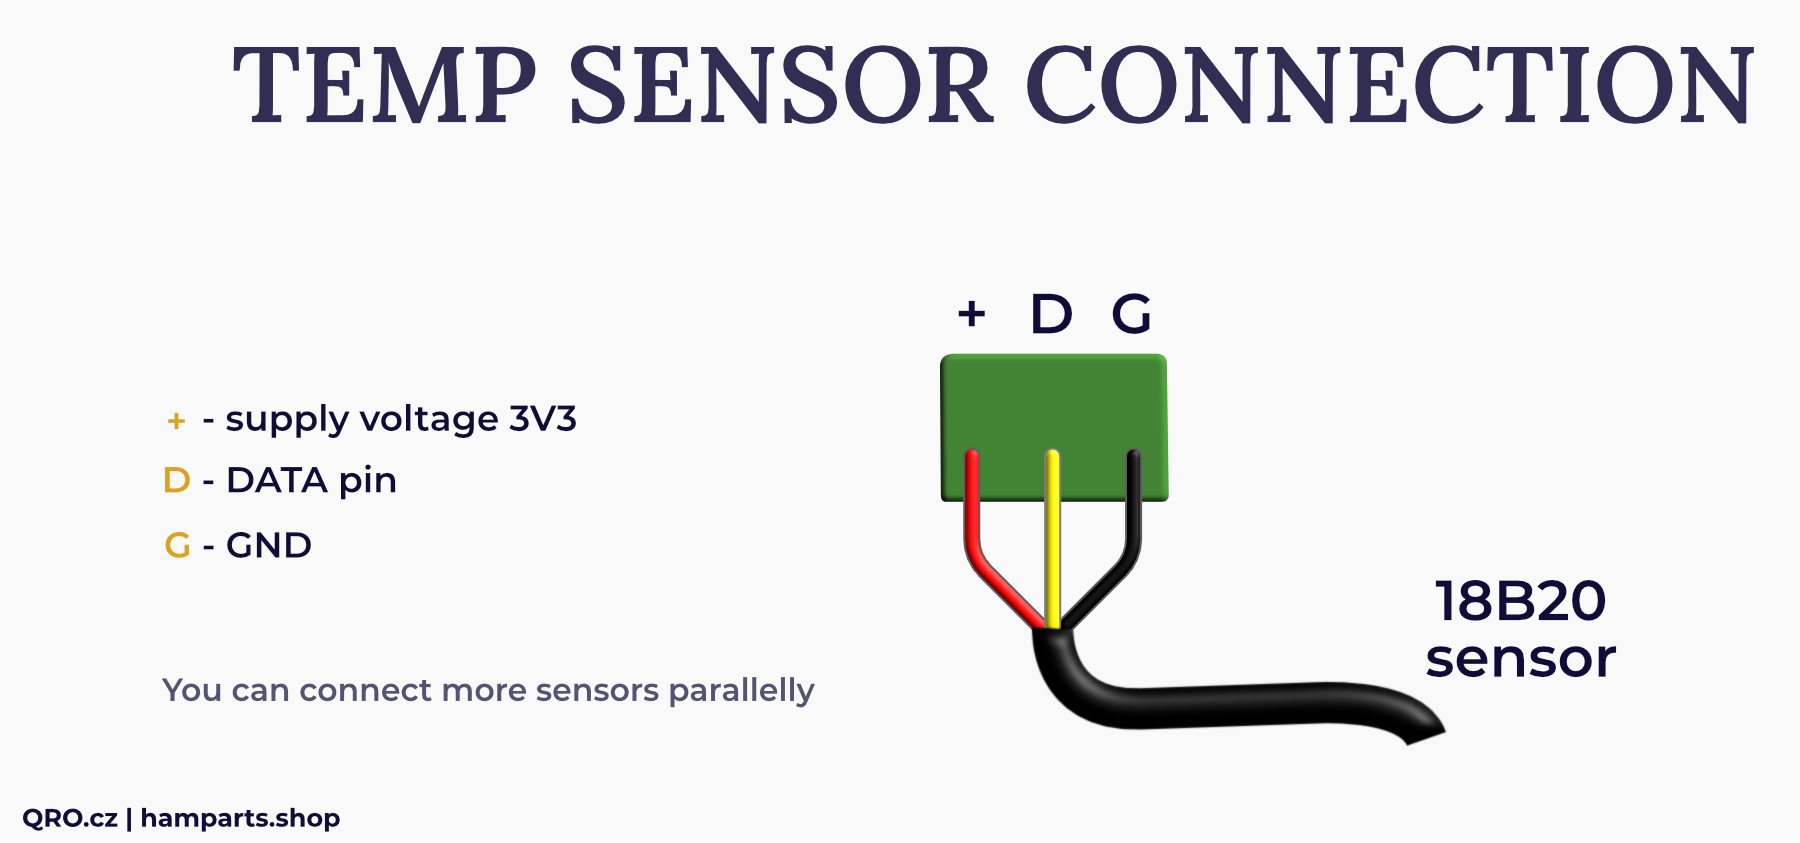 temperature sensor connection qro.cz hamparts.shop